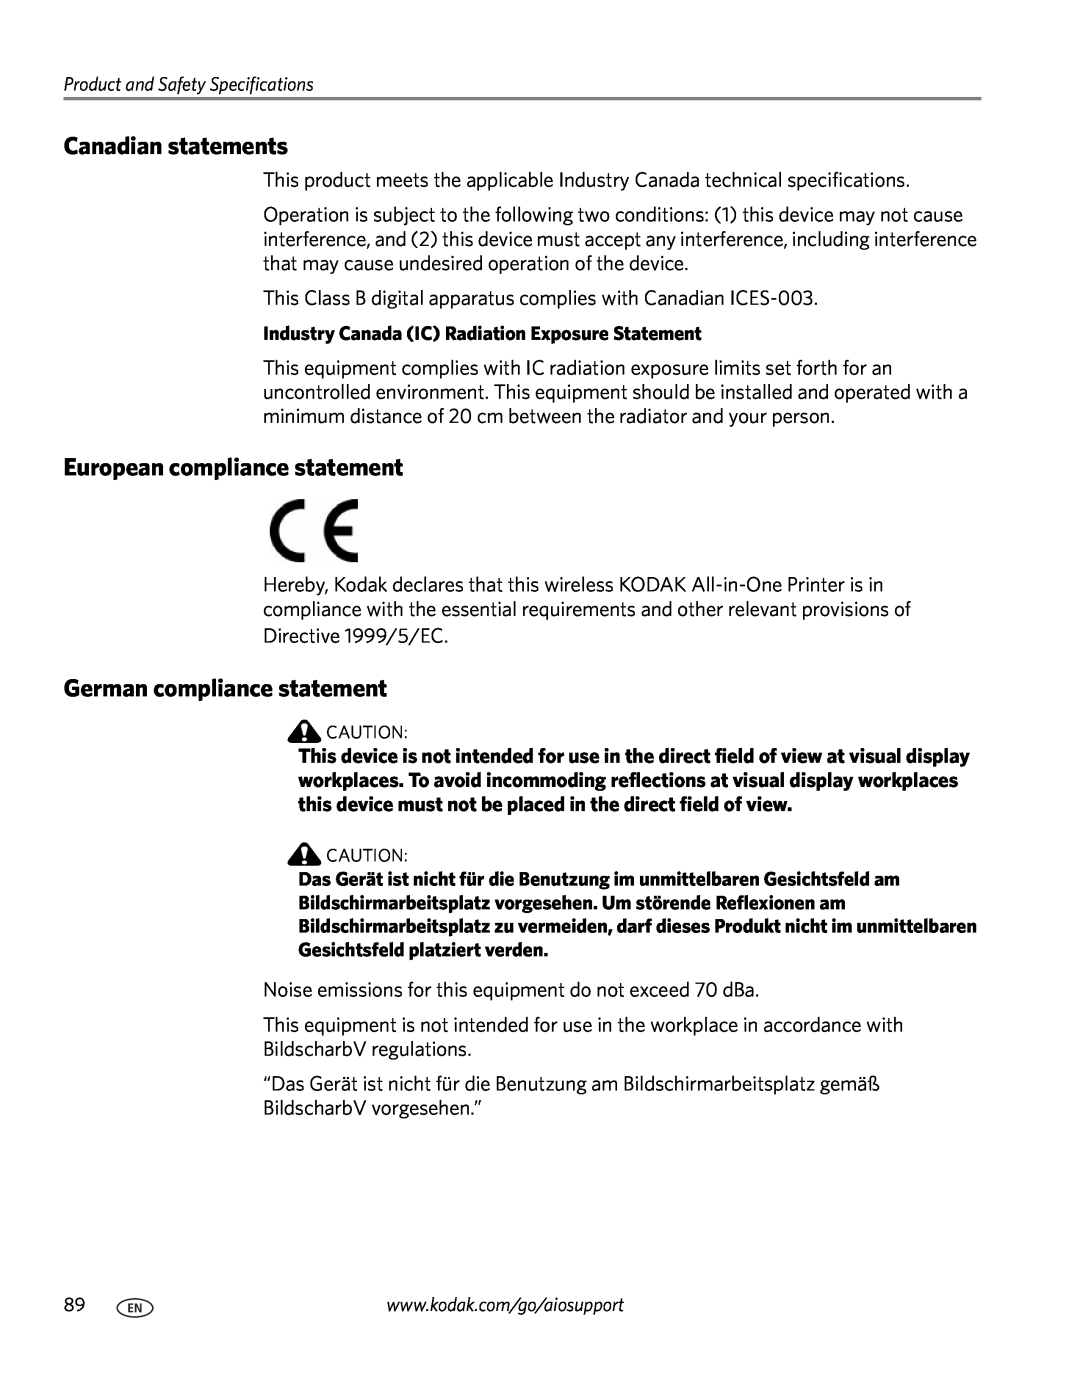 Kodak 3.1 manual Canadian statements, European compliance statement, German compliance statement 